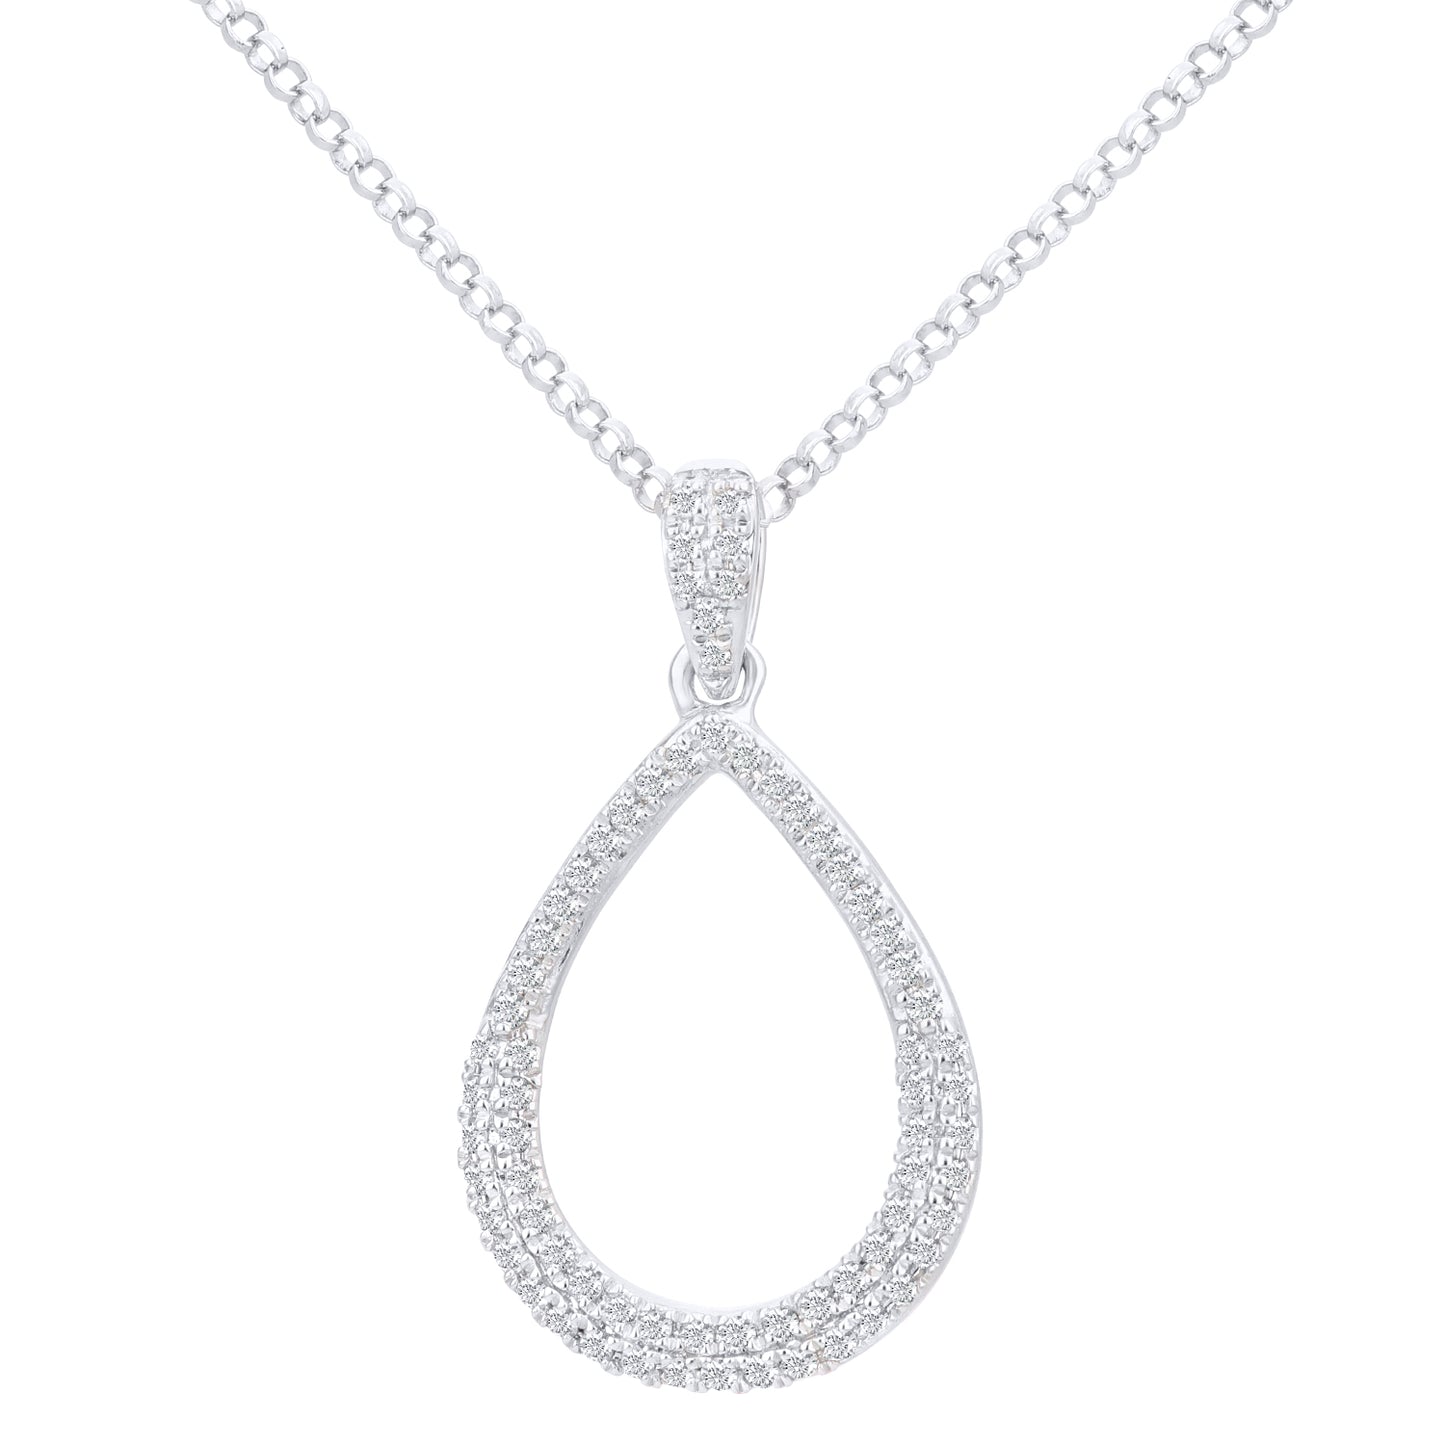 18ct White Gold  20pts Diamond Teardrop Pendant Necklace 16 inch - DP1AXL625W18